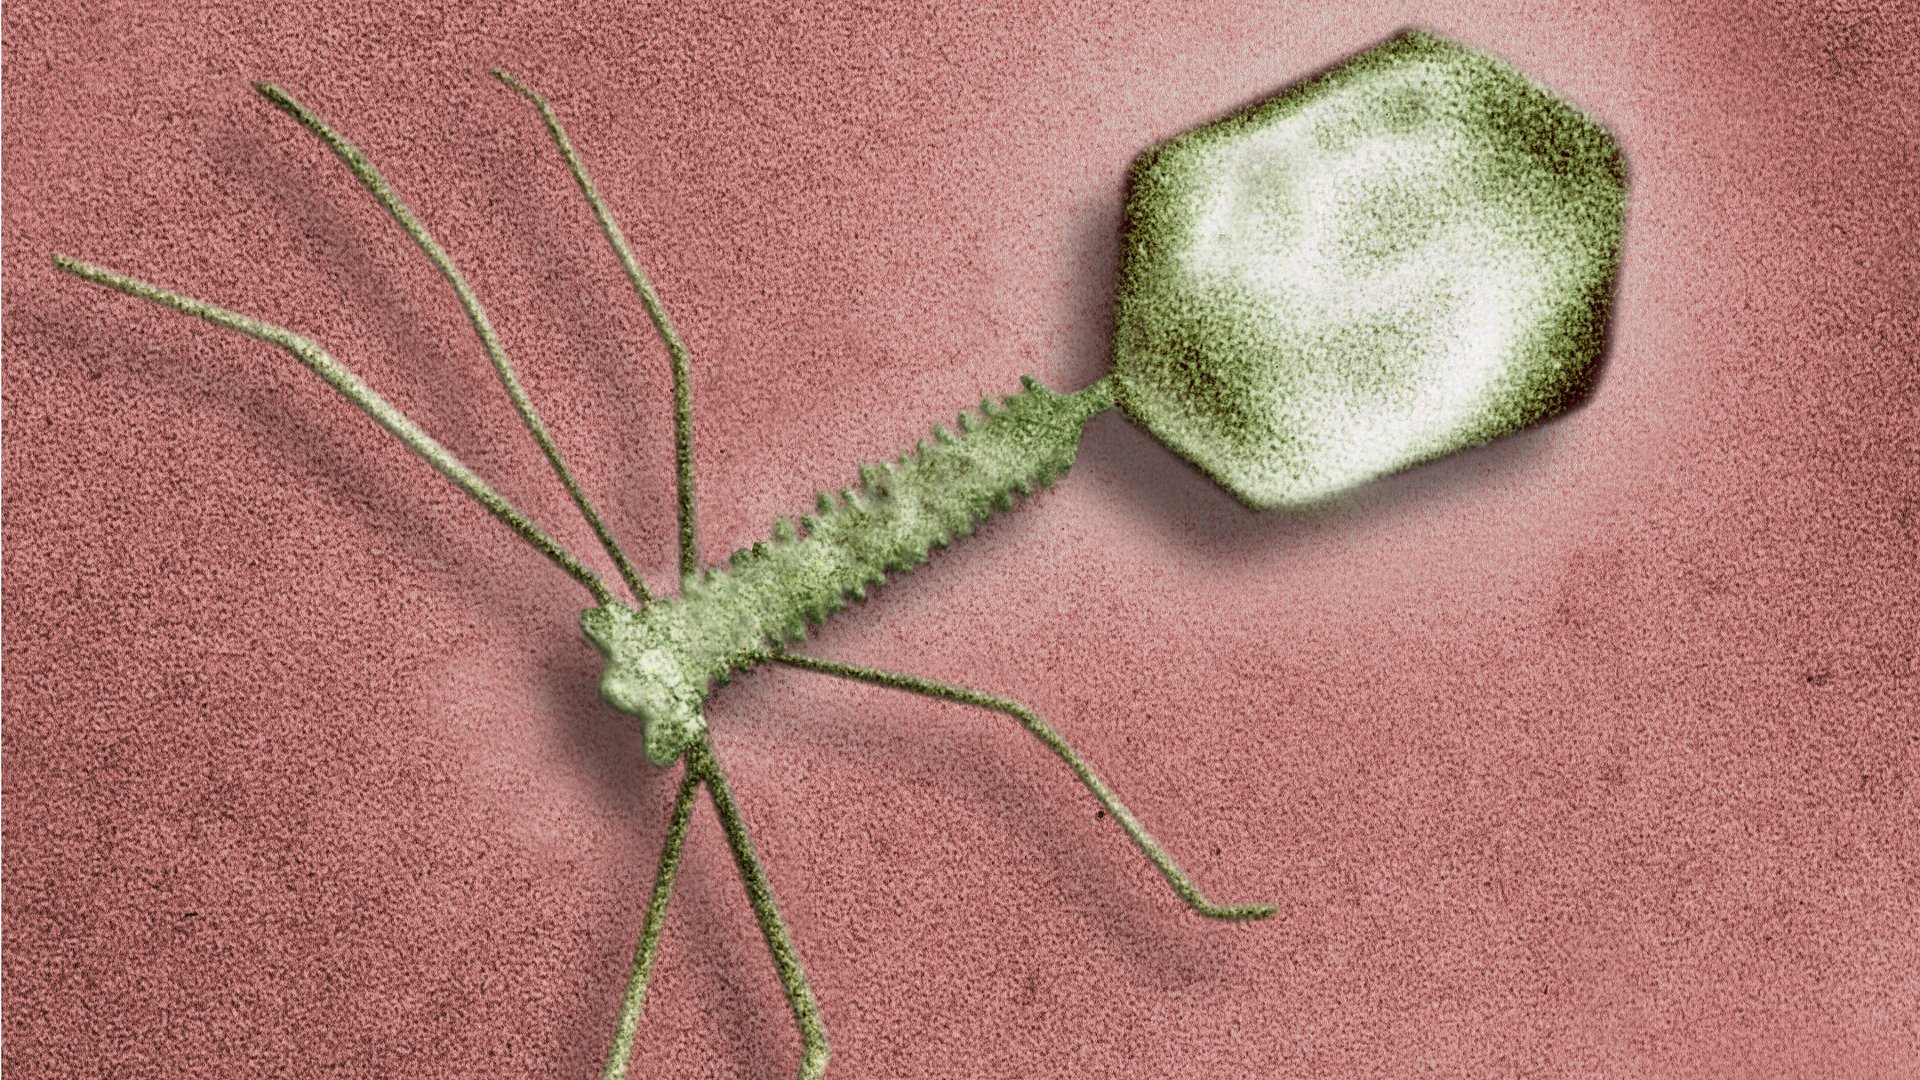 Bacteriophage_bacteriofaag_bacterie_virus_anp_1920x1080.jpg